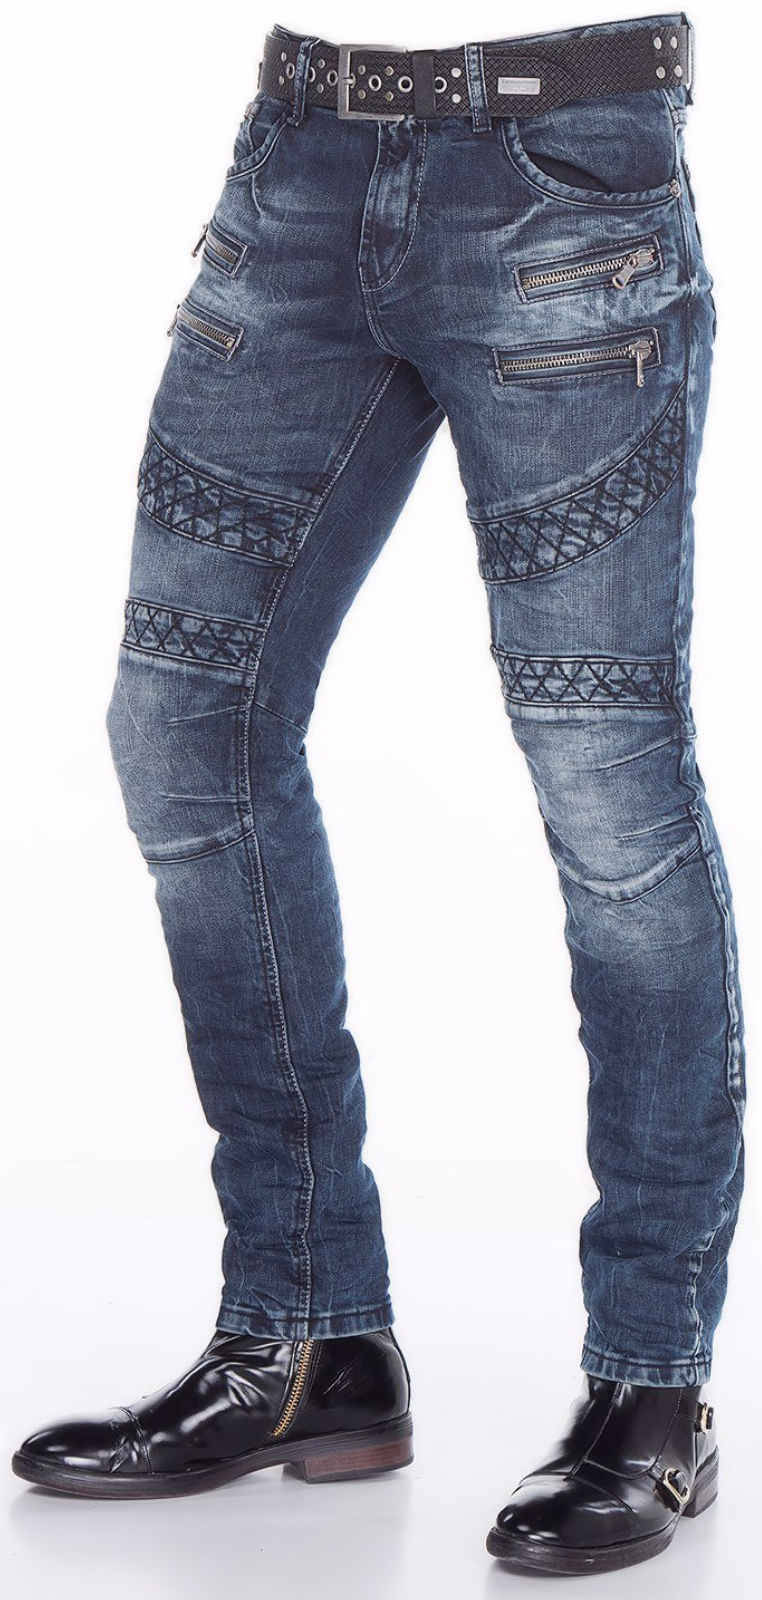 Cipo & Baxx Men's Jeans CD382 New Trousers Skinny/Slim Fit Narrow Leg ...